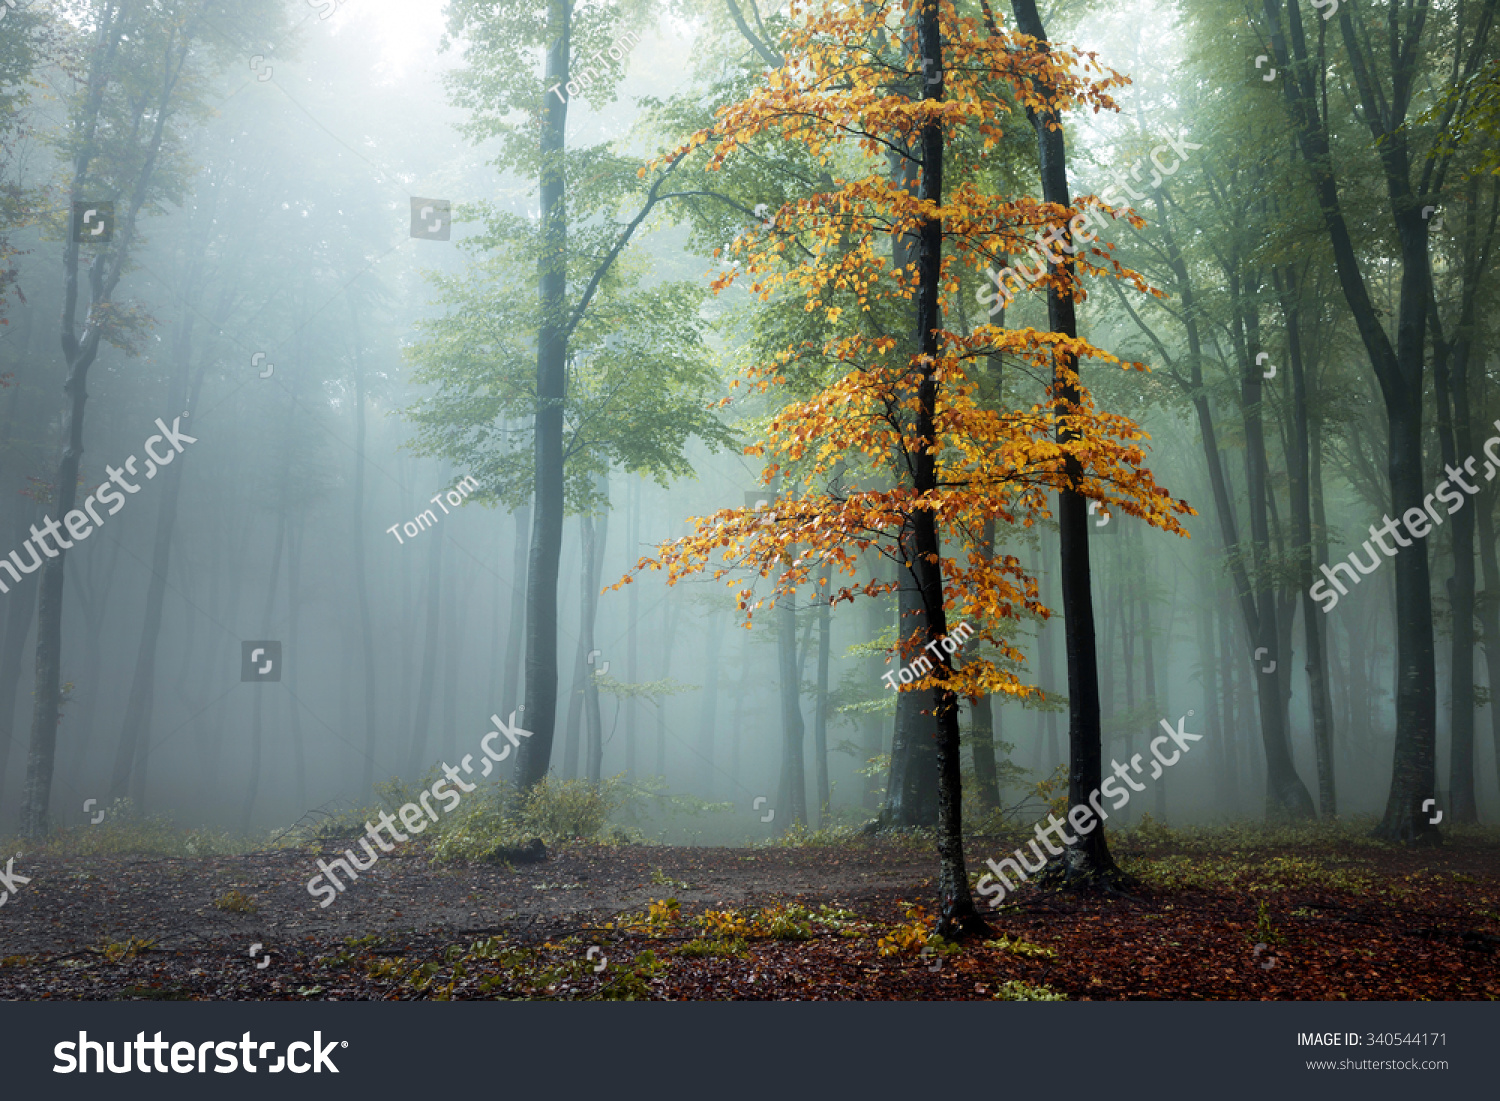 Orange tree in foggy forest #340544171